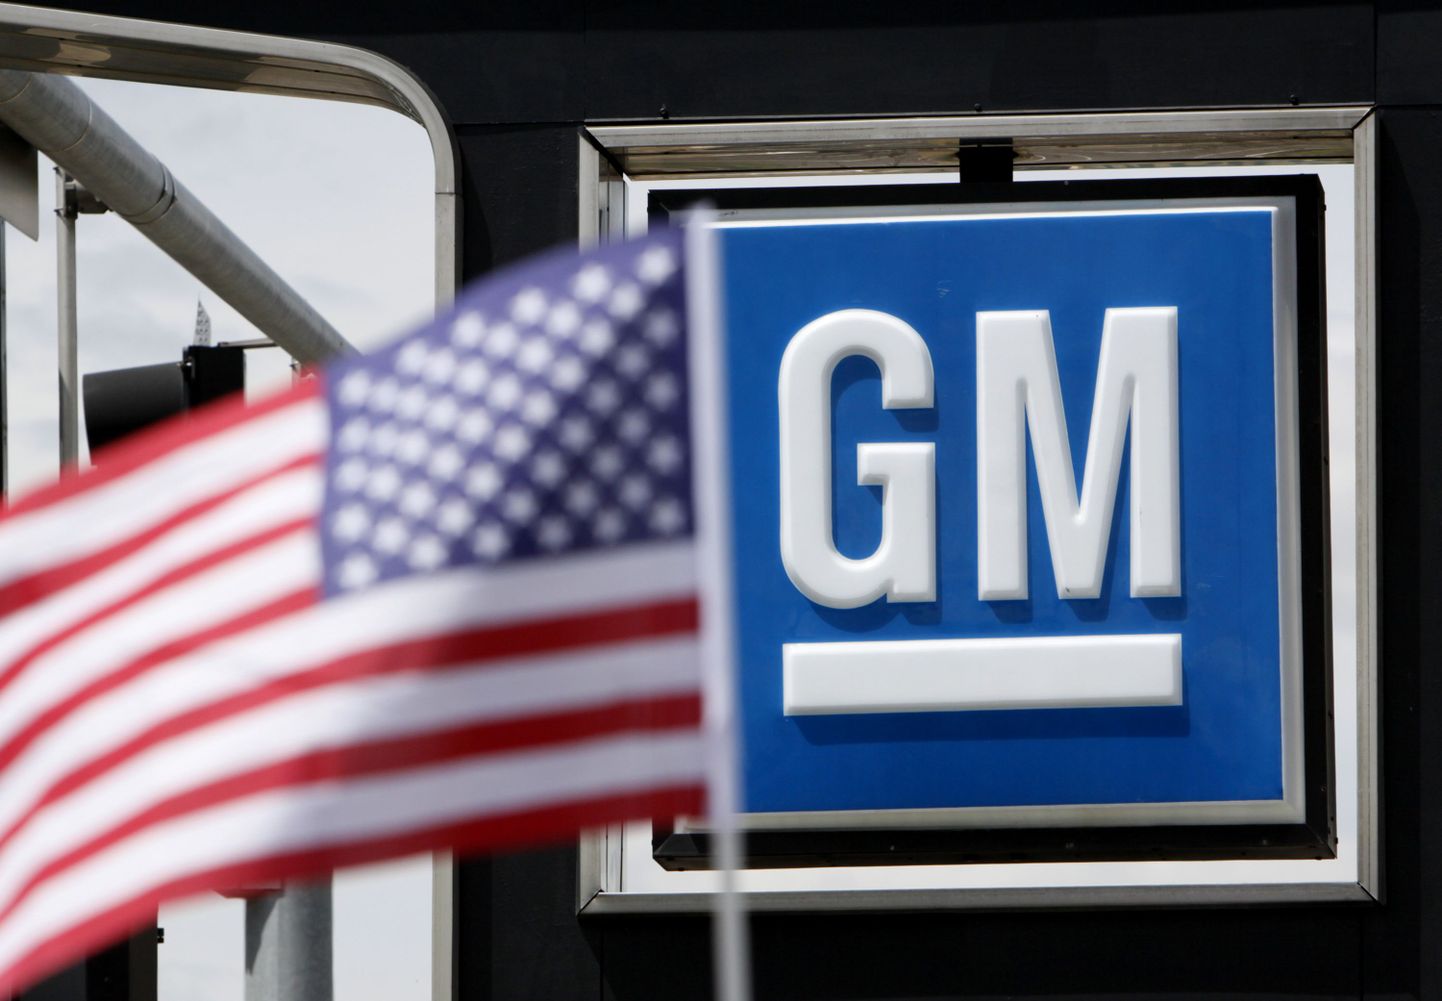 Washington ei taha General Motorsit vabaks lasta.